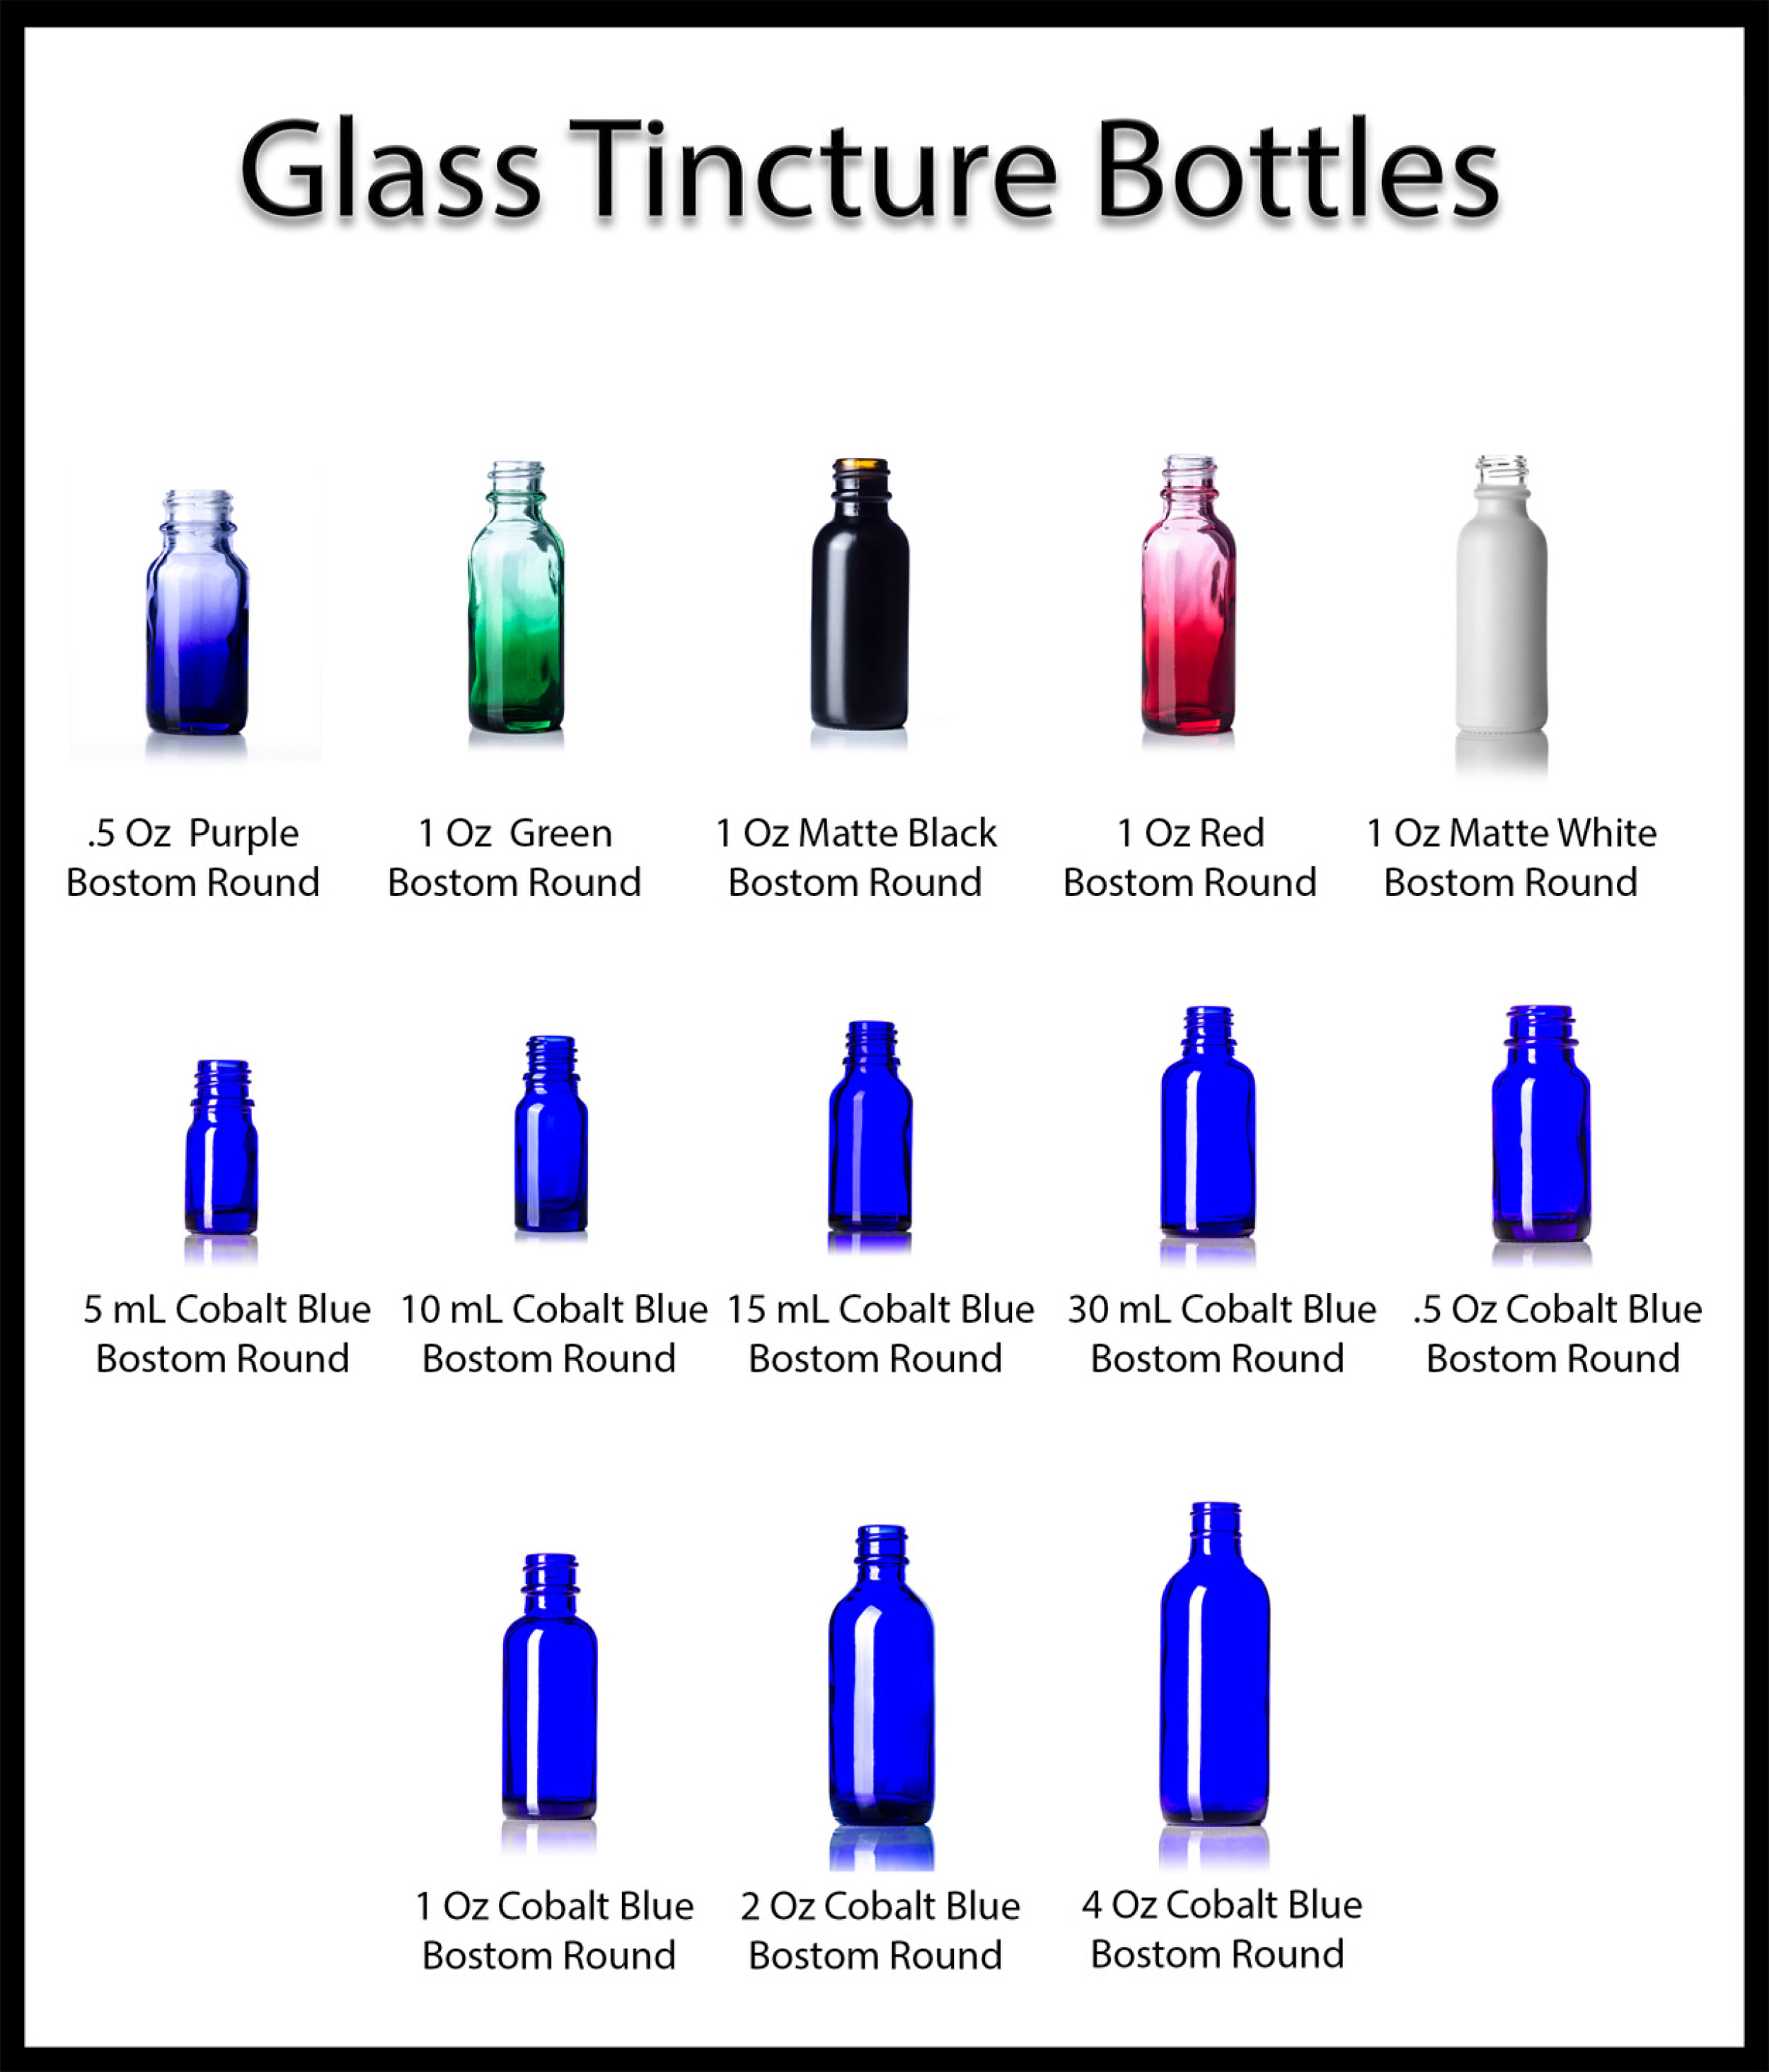 Glass Tincture Bottles